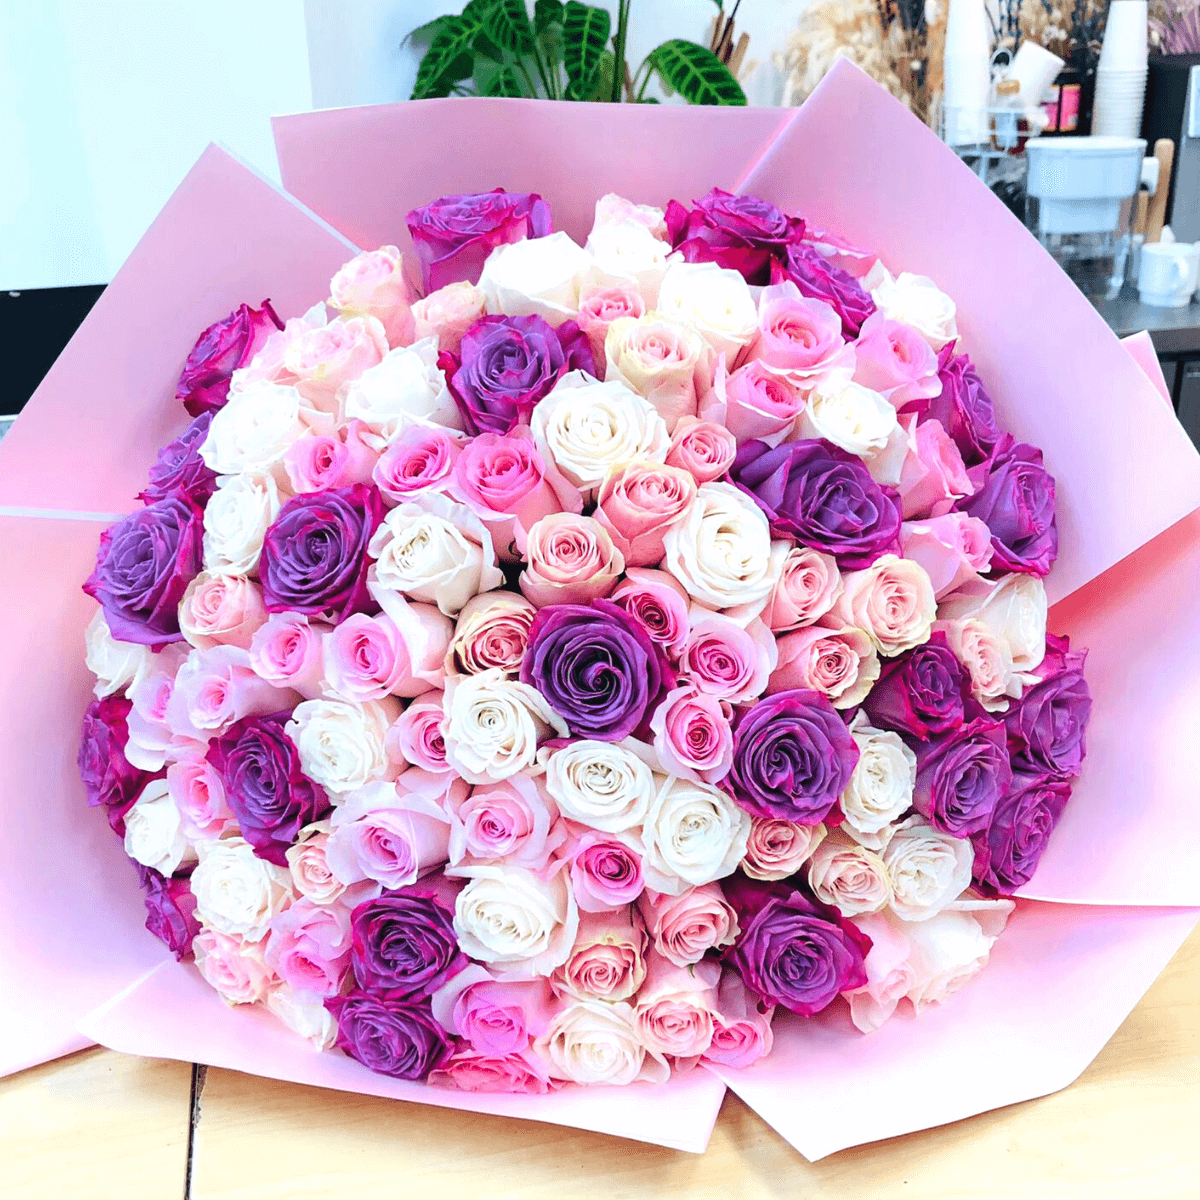 purple pink rose bouquet